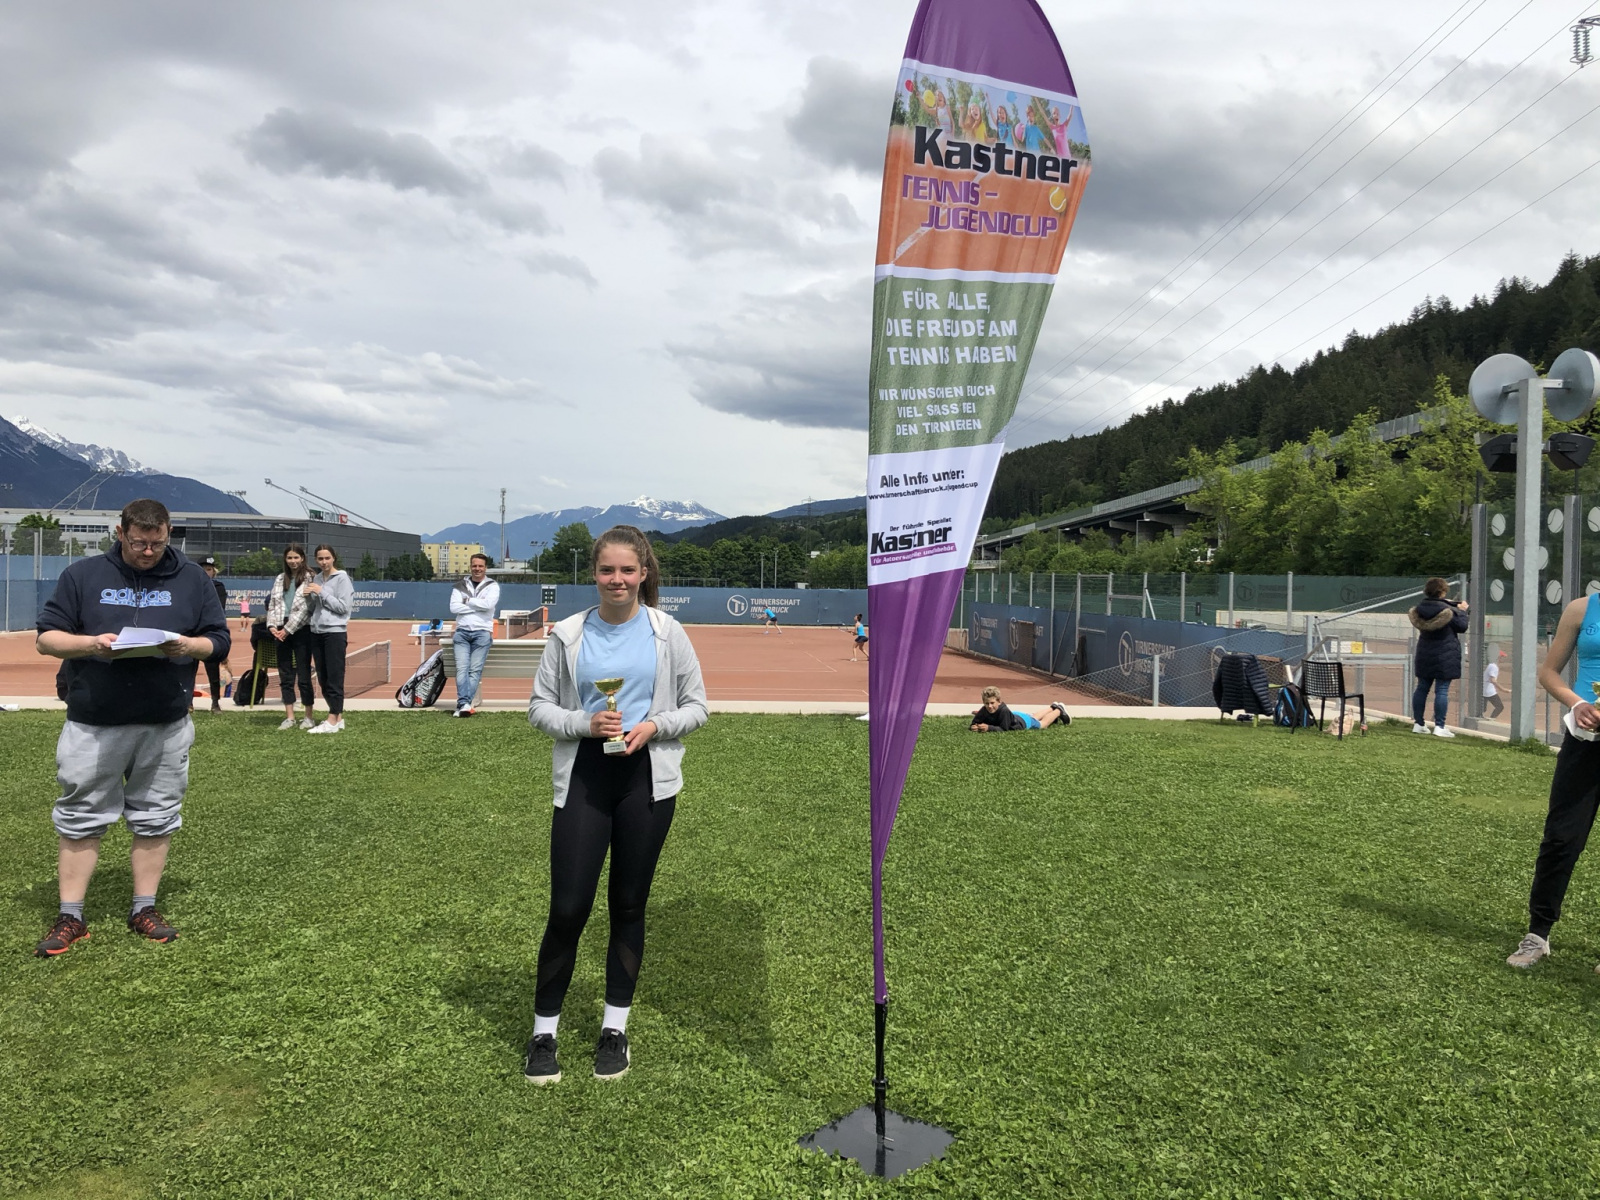 Kastner-Tennis-Jugend-Cup-2021-Turnerschaft-Innsbruck-19